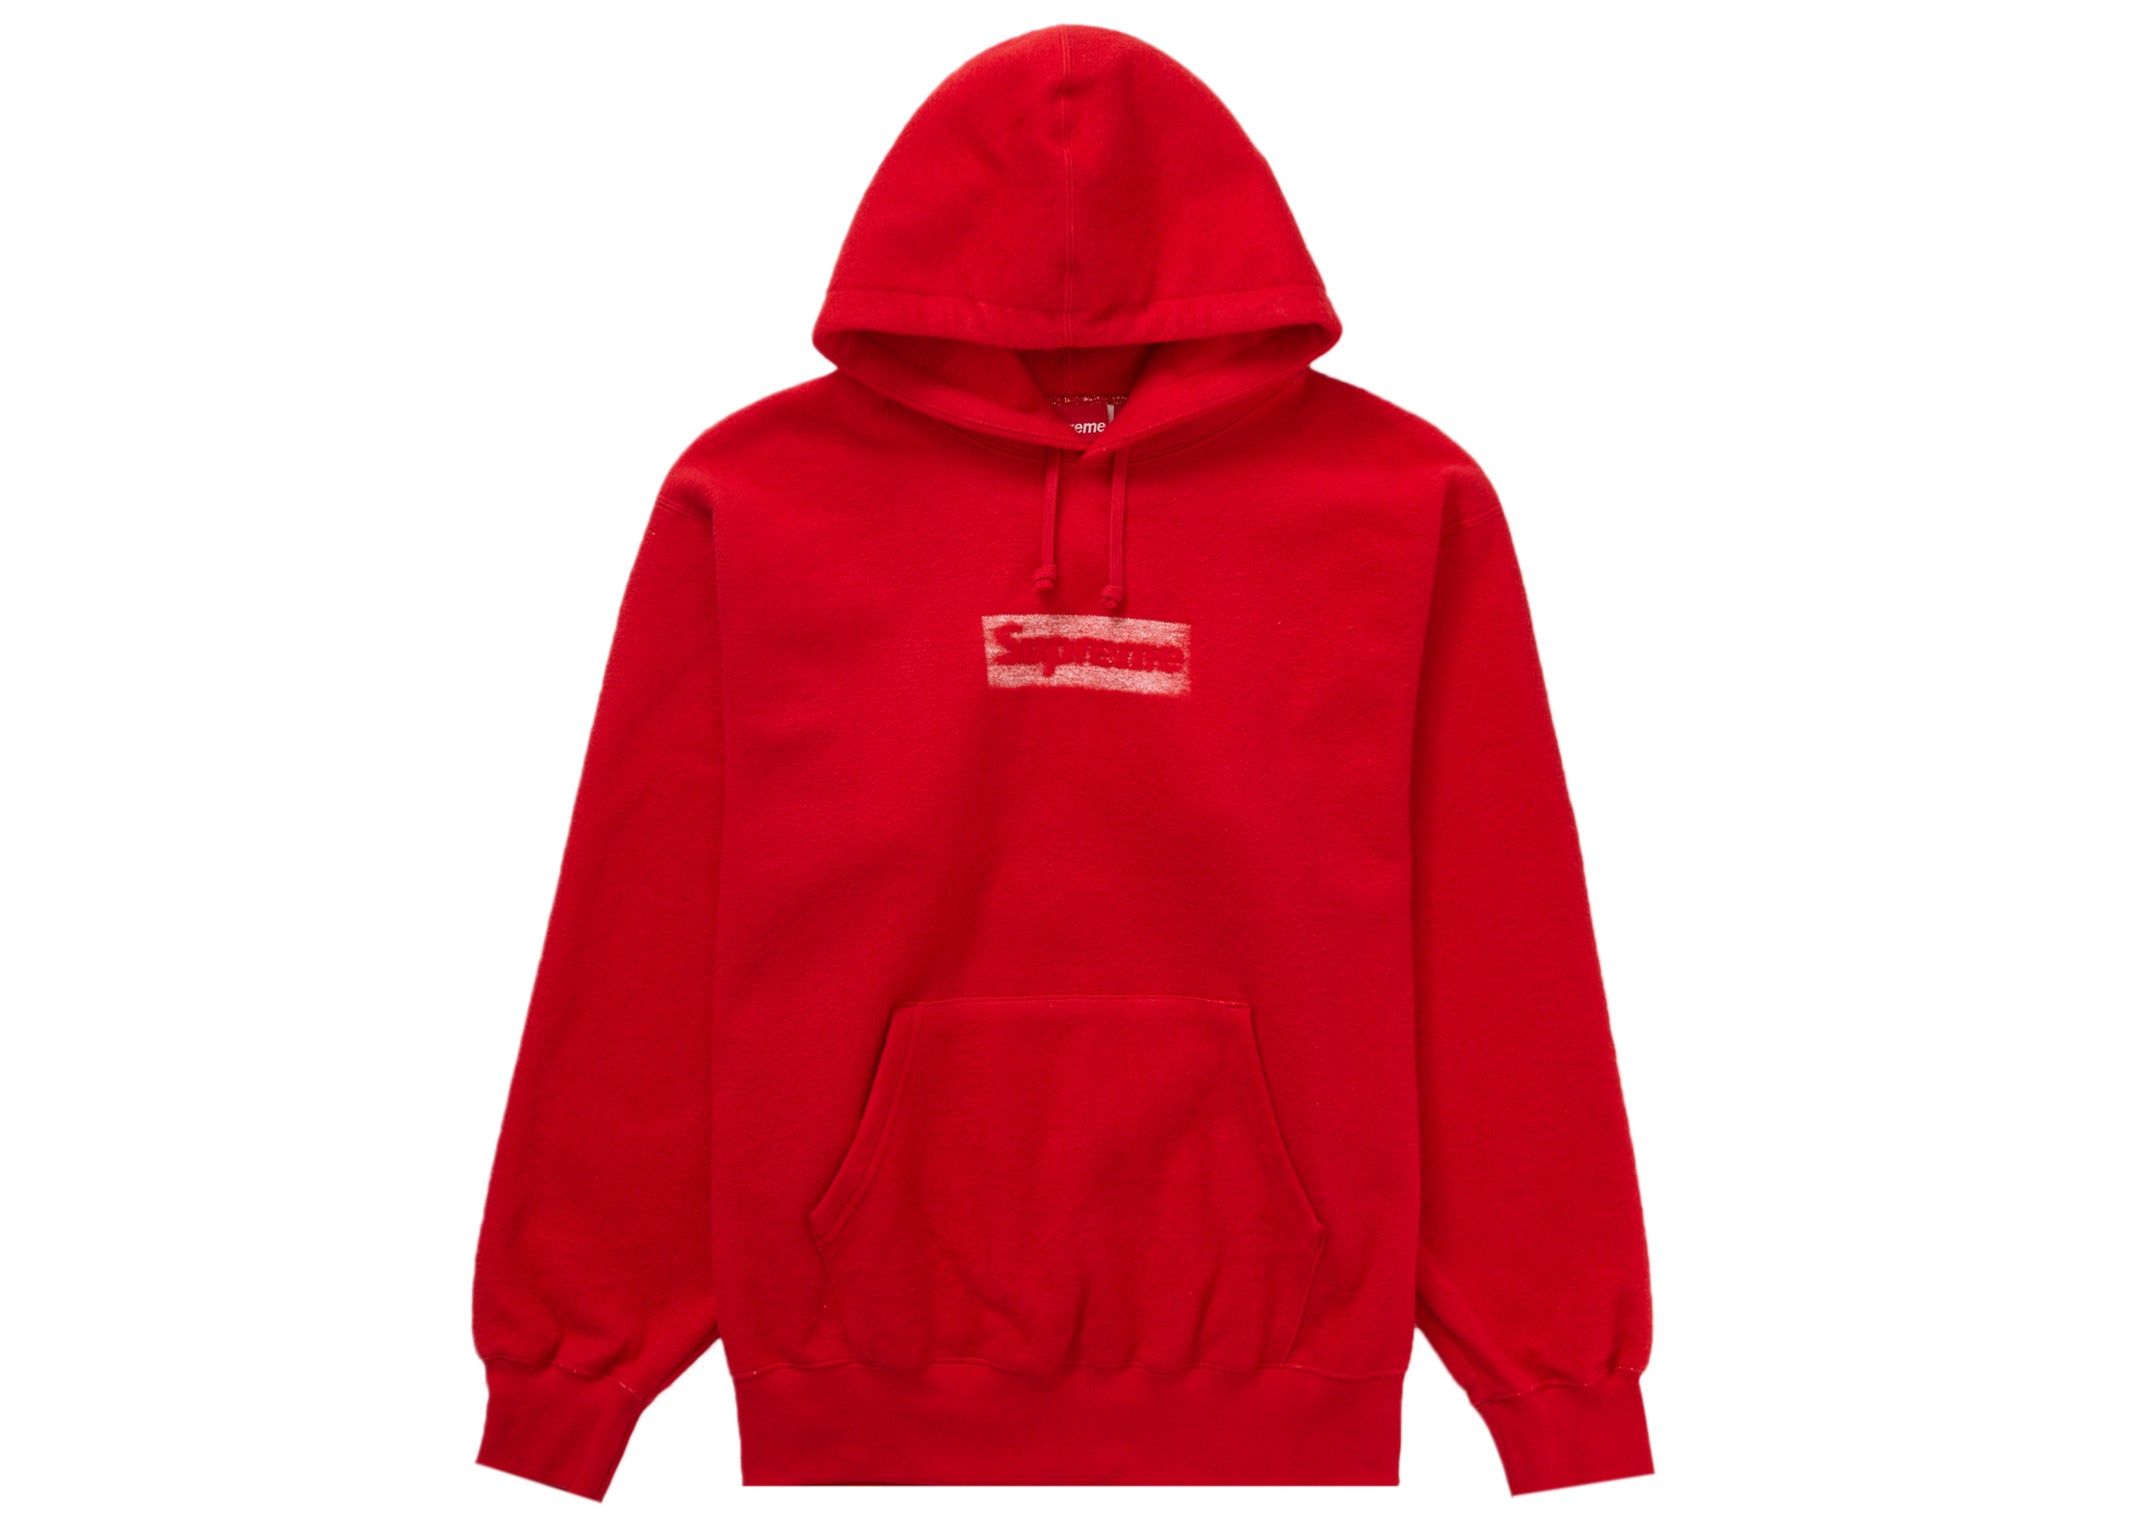 Supreme Cross Embroidered Box Logo Hooded Sweatshirt Red